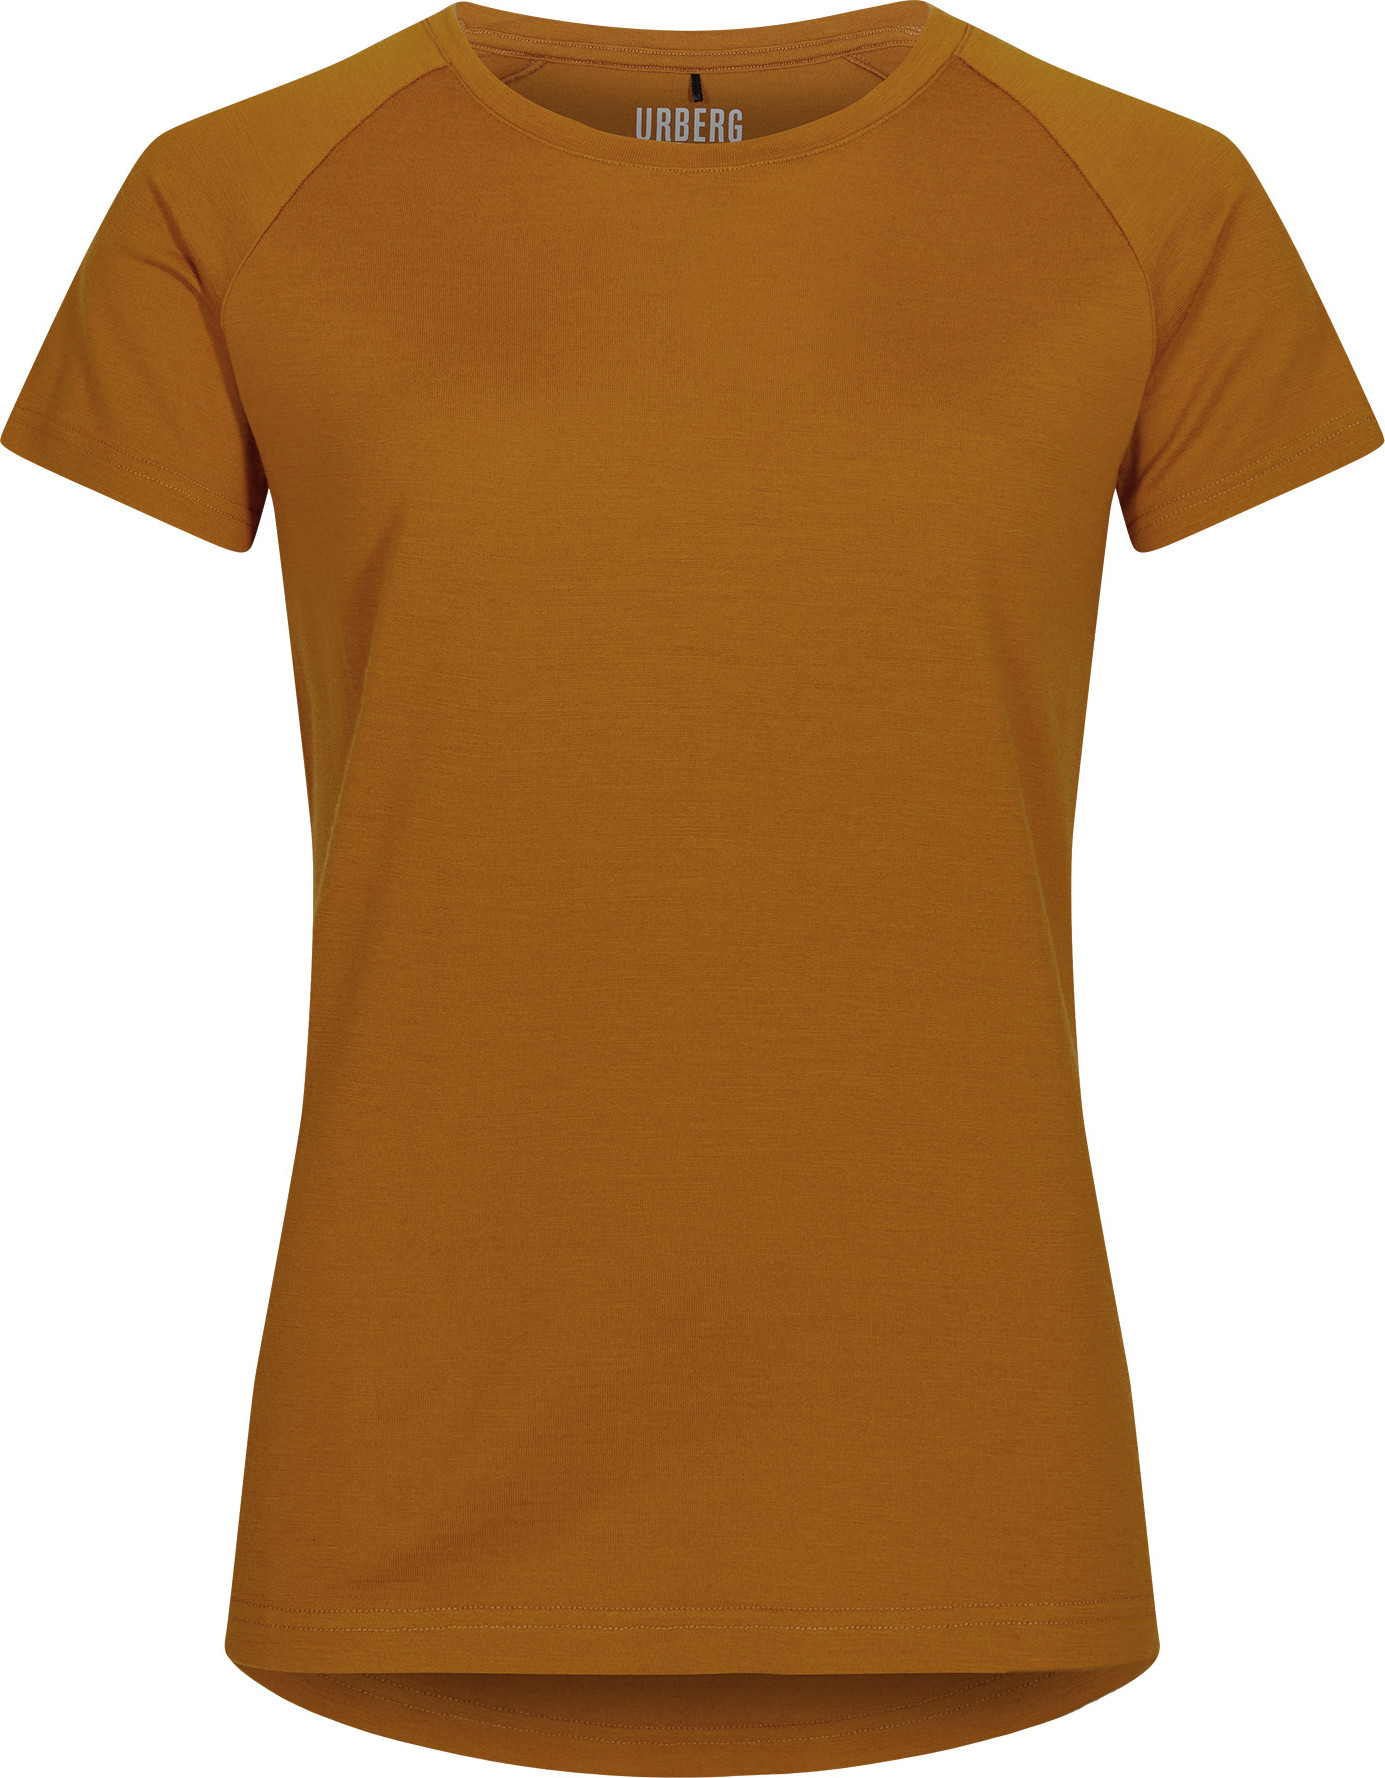 Urberg Women’s Lyngen Merino T-Shirt 2.0 Pumpkin Spice